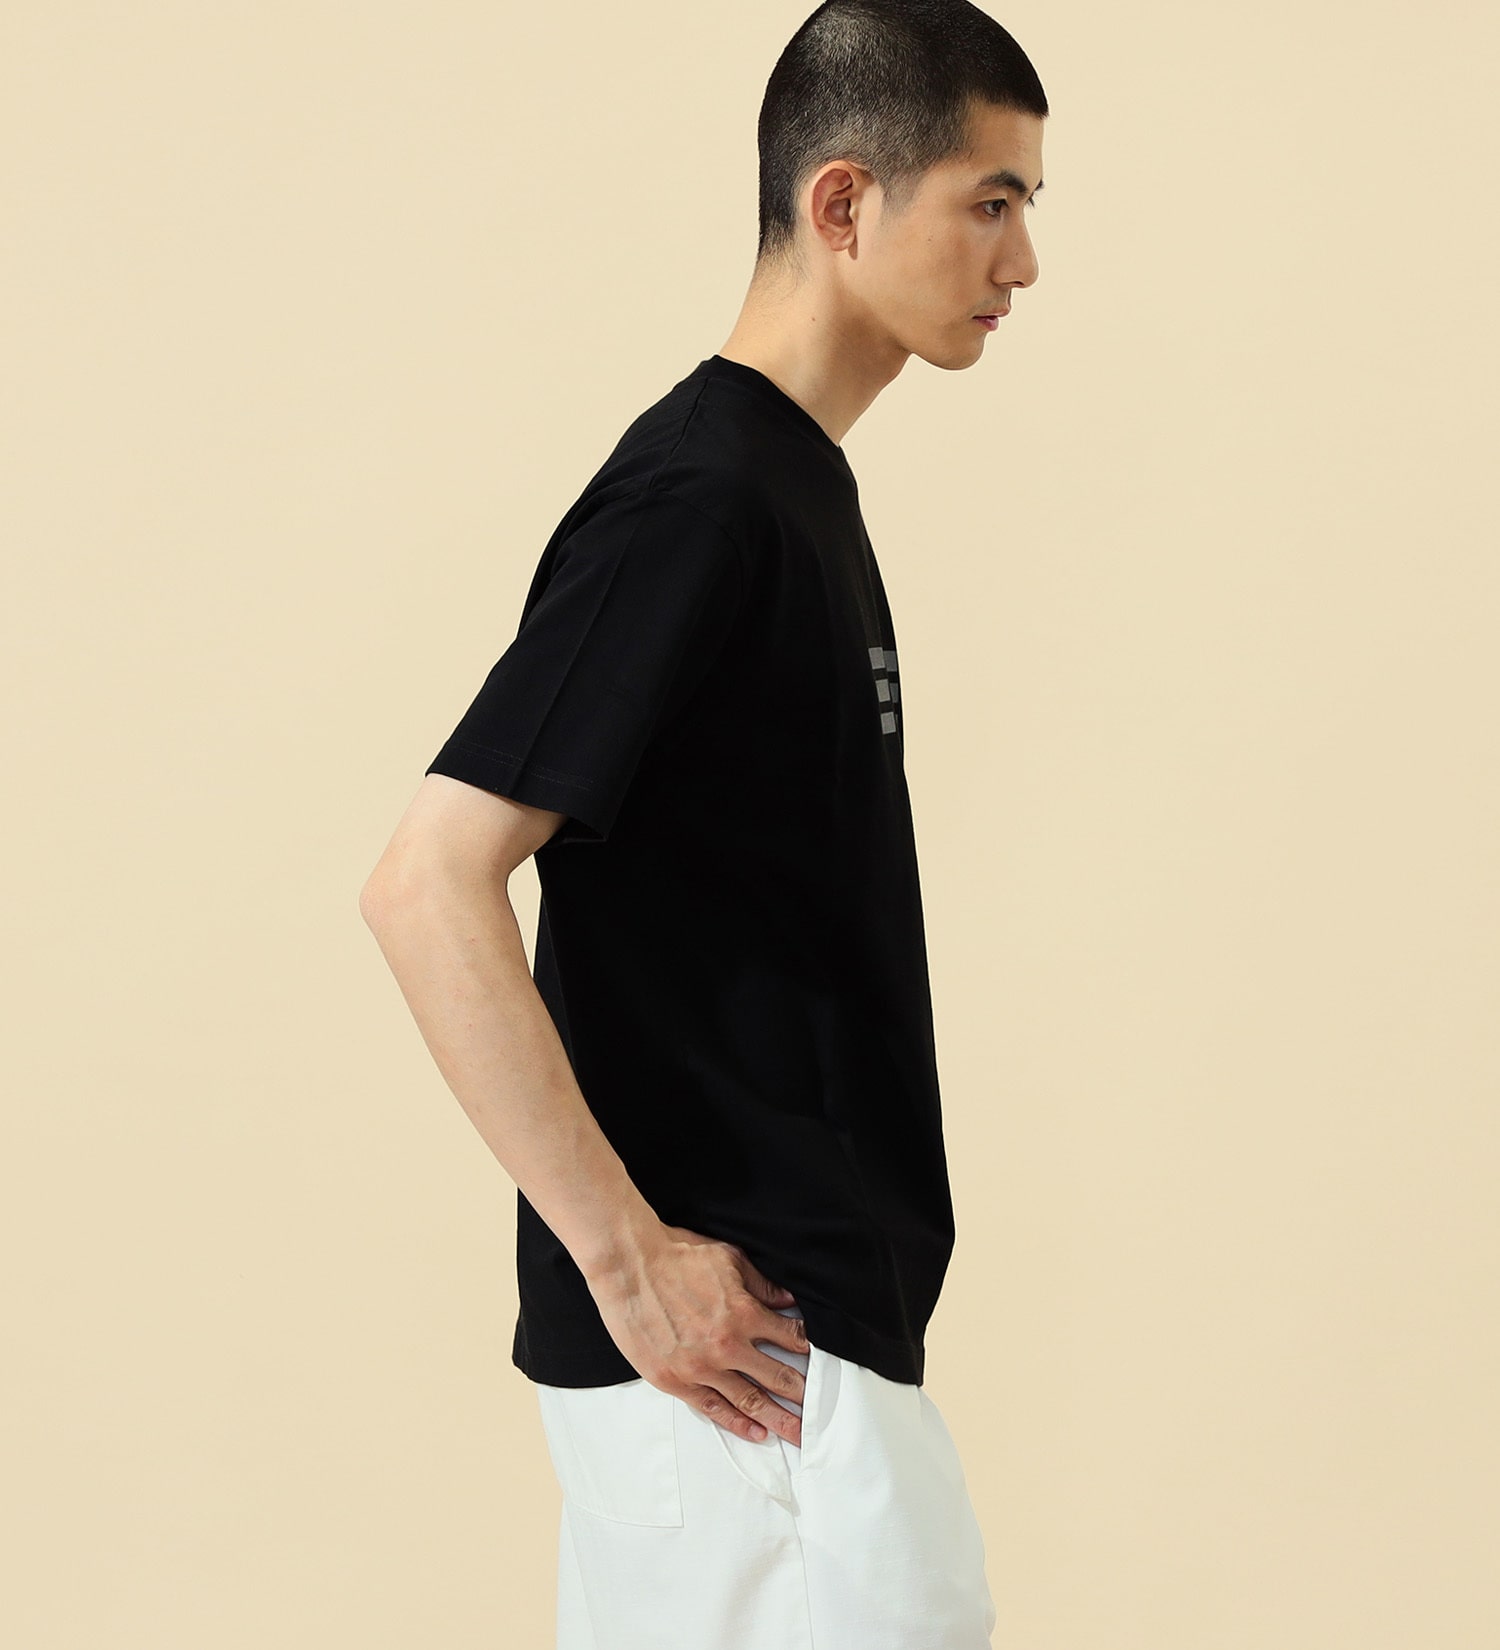 ALPHA(アルファ)のAマークロゴプリントTシャツ 半袖|トップス/Tシャツ/カットソー/メンズ|ブラック